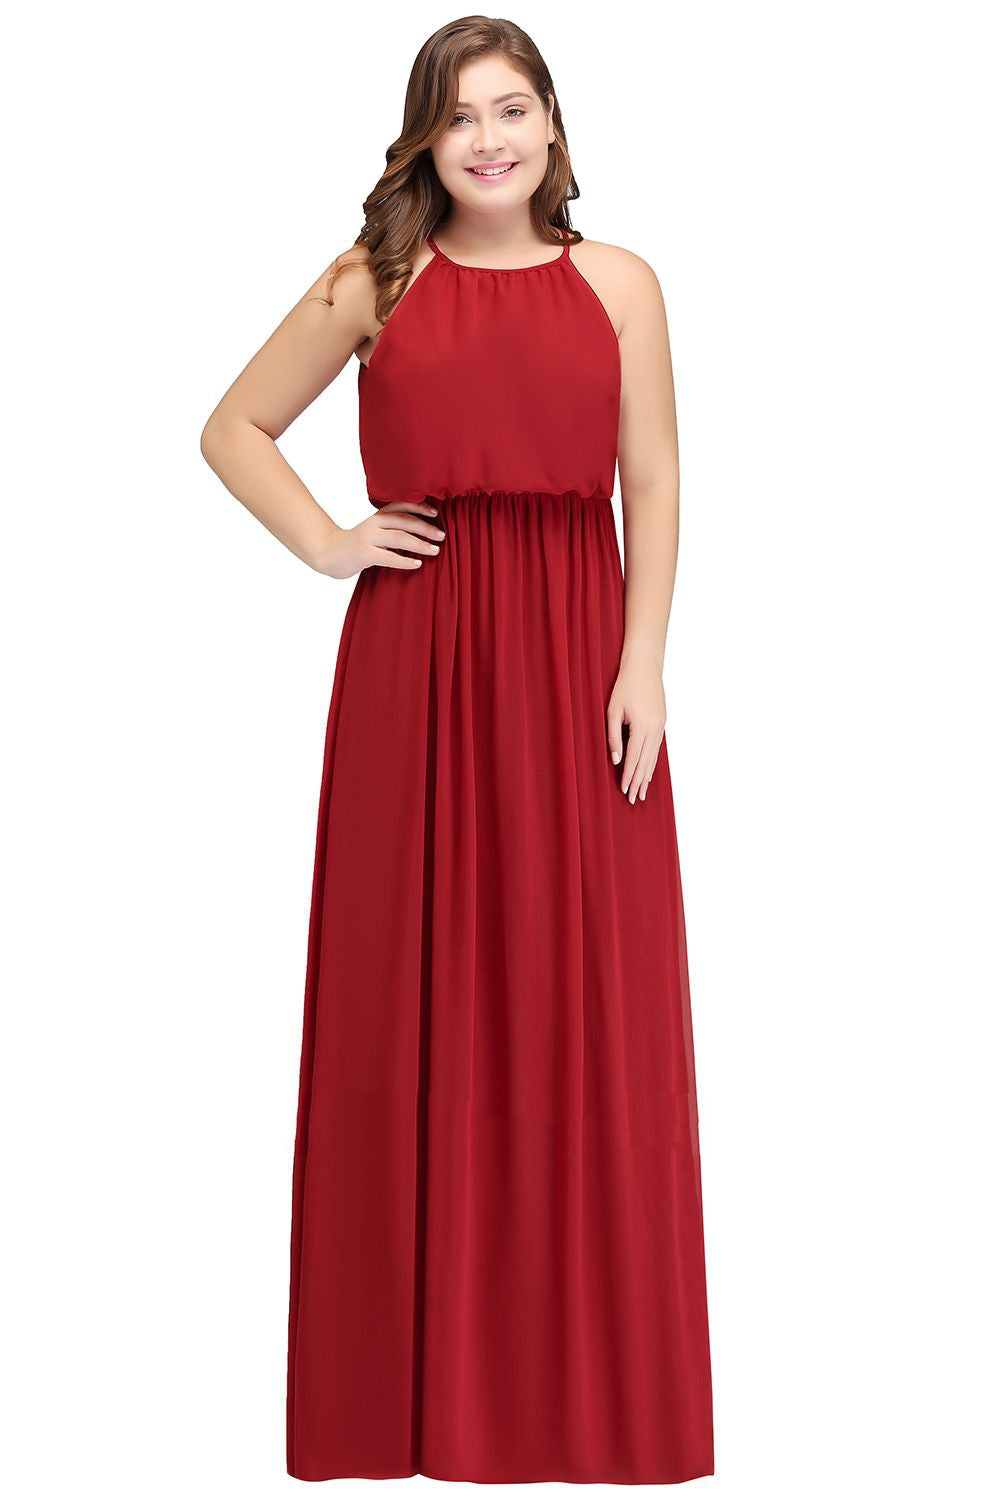 Ruby Red Long Plus Size Bridesmaid Dress BPPBD008